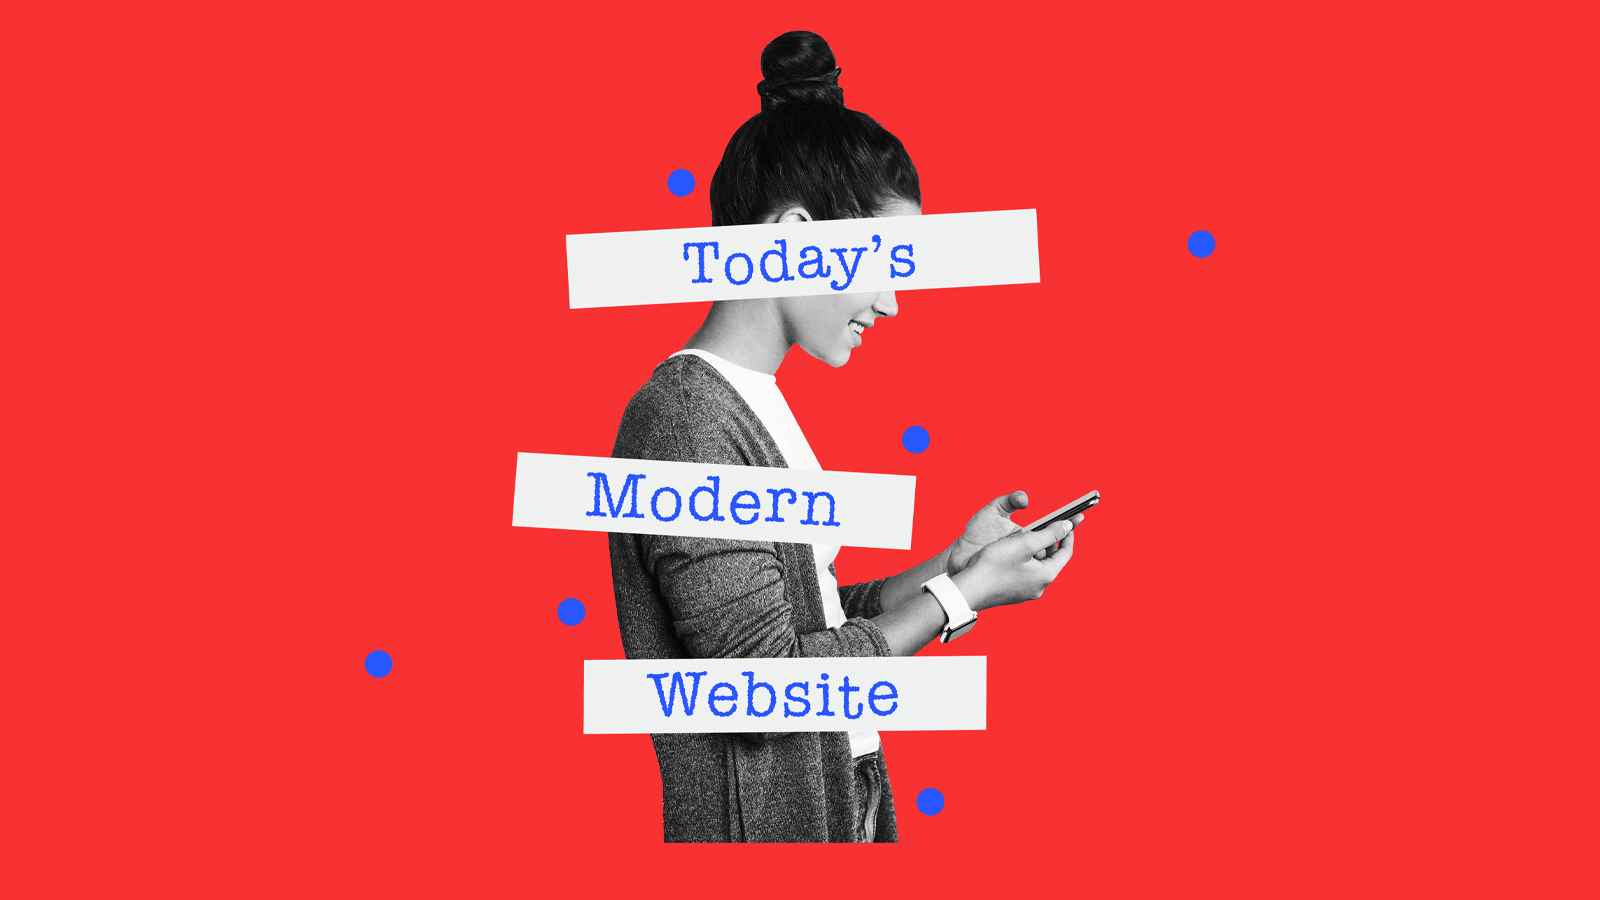 Today's Modern Website